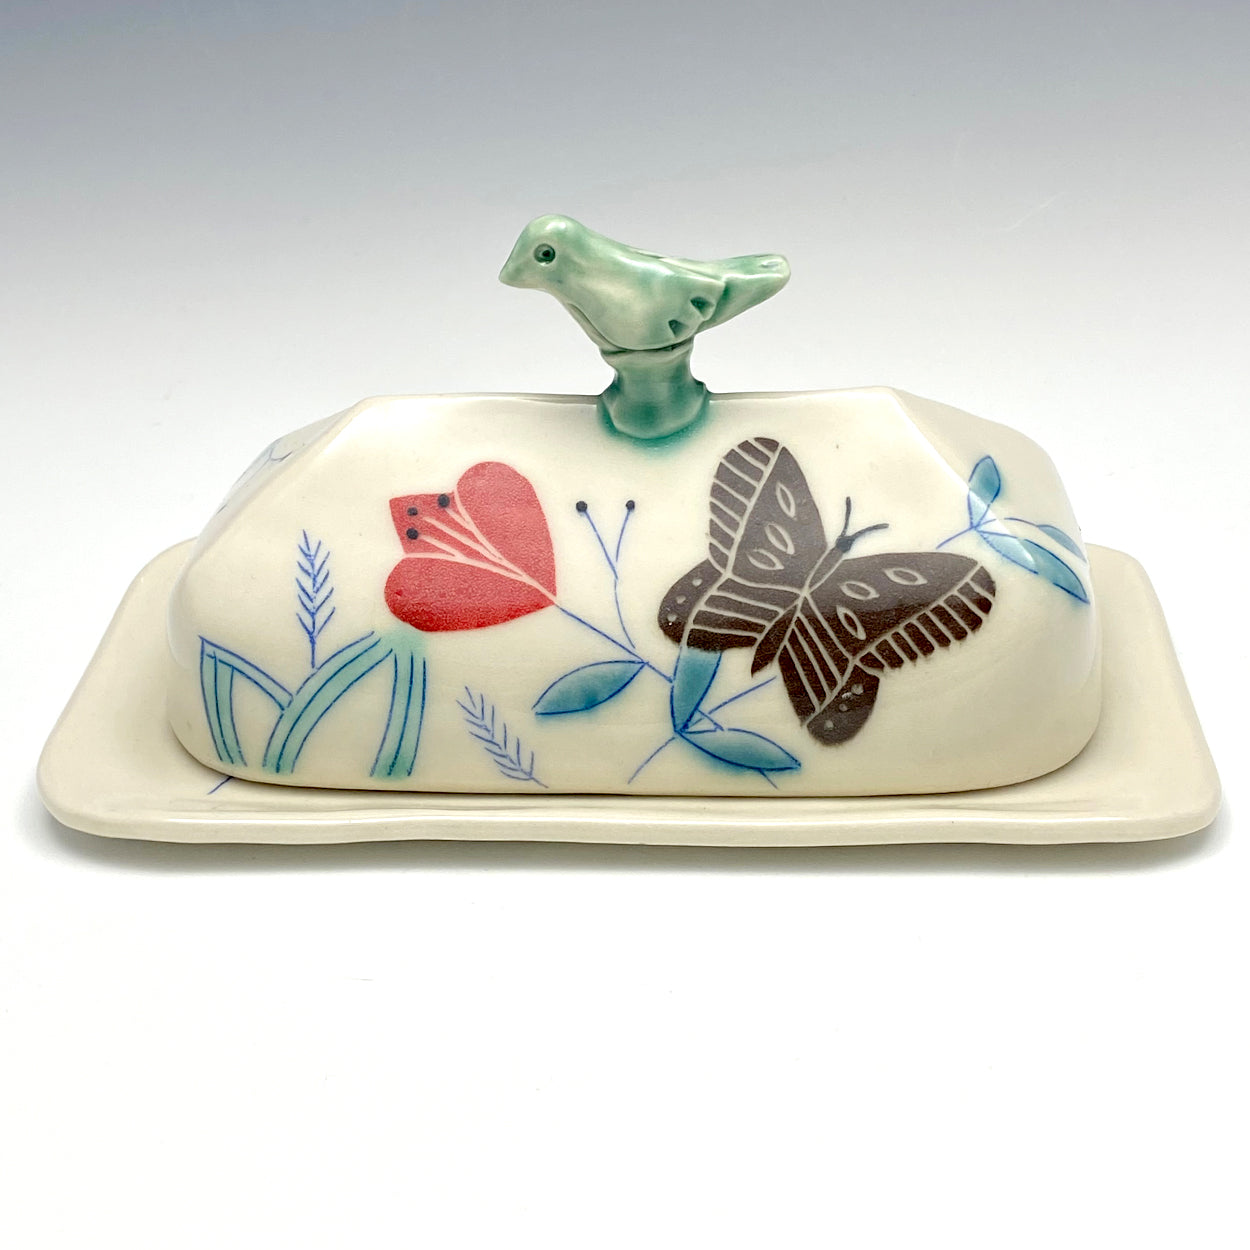 Butter dish with sculpted bird and brown butterflies